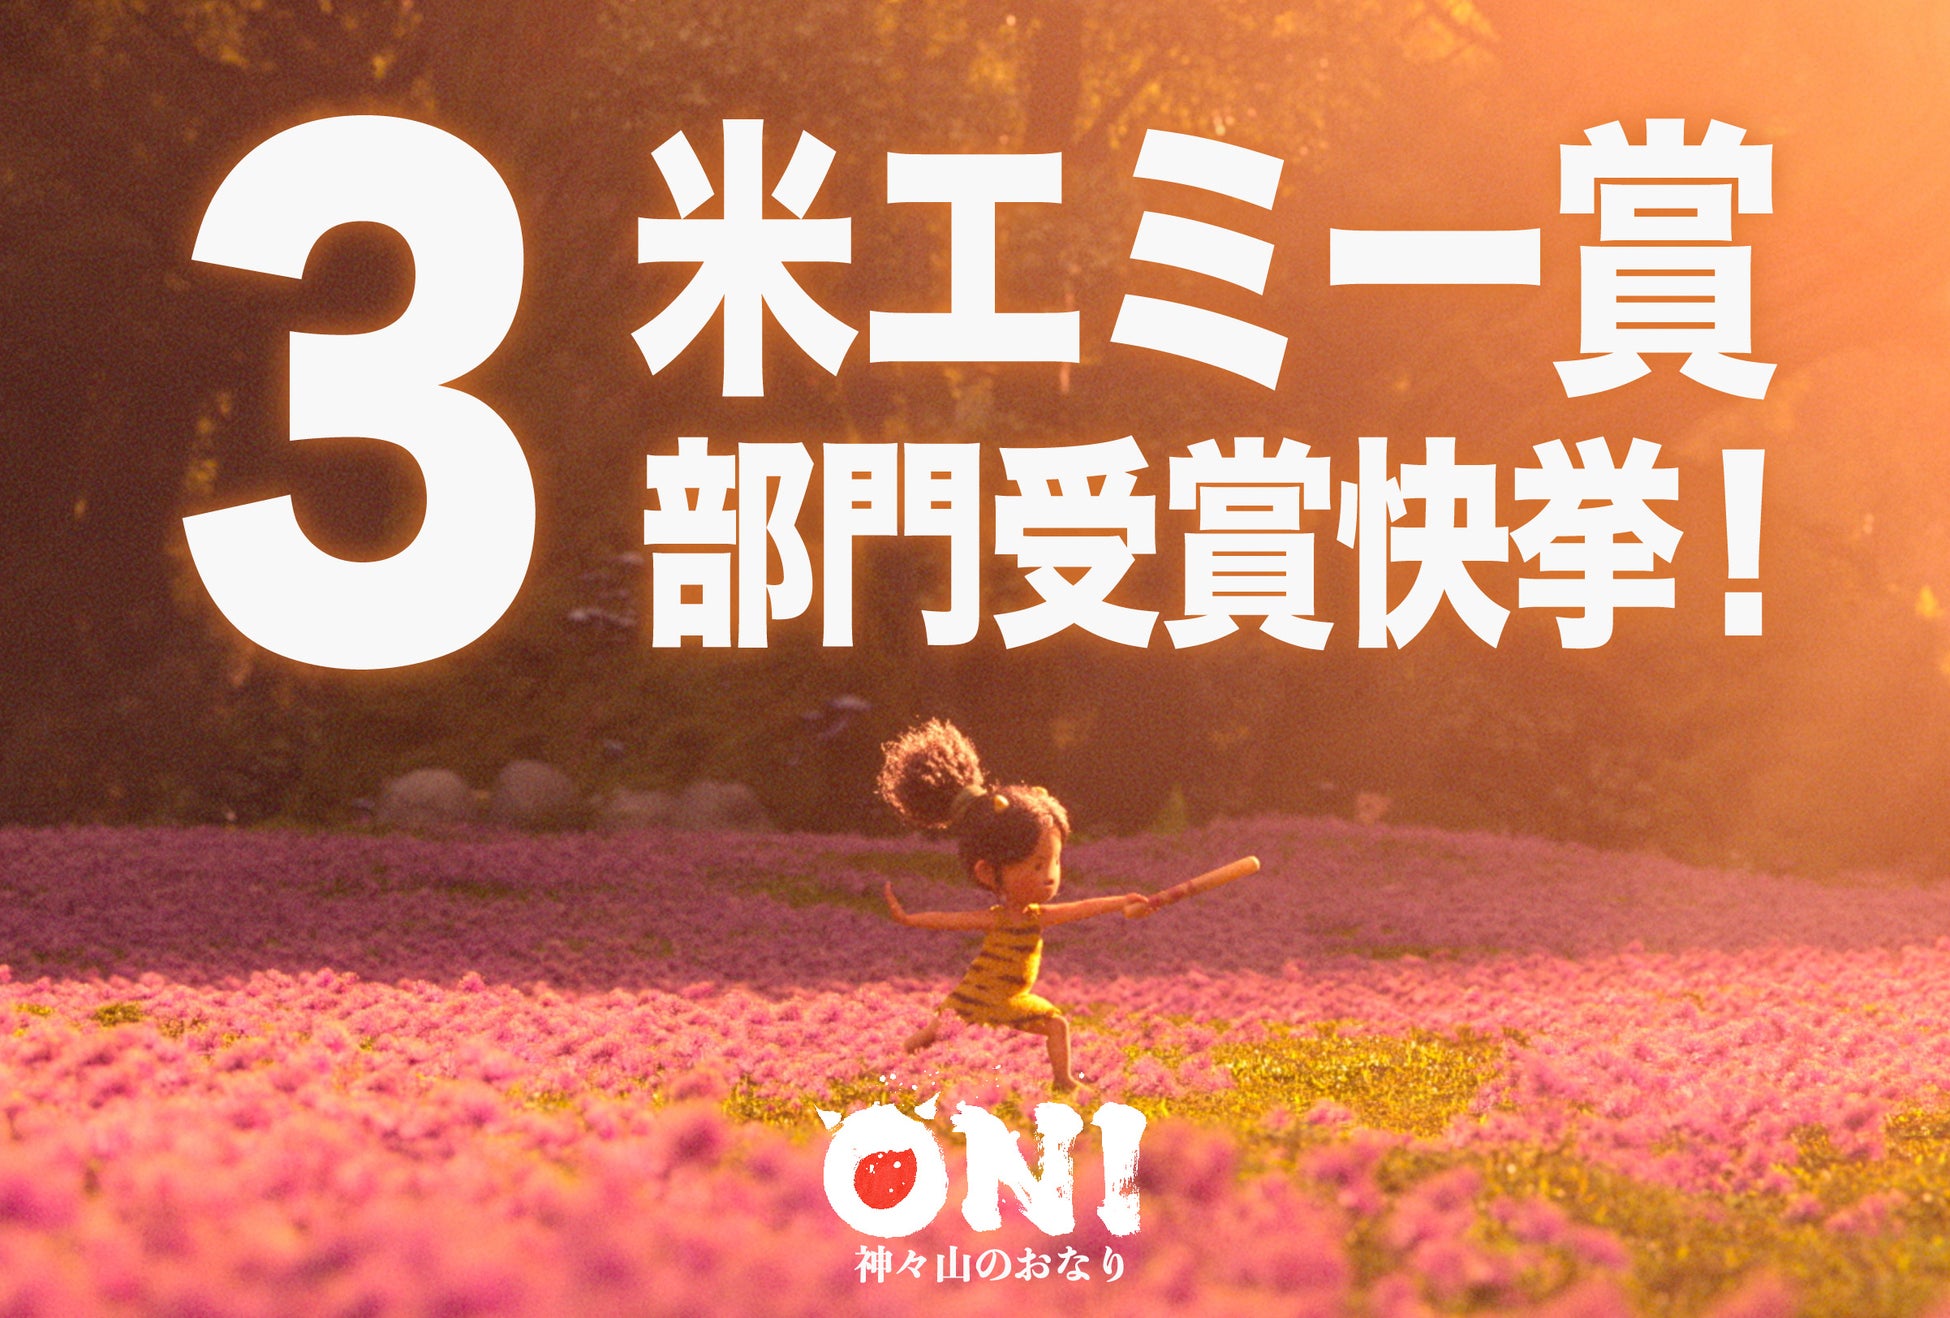 Netflixシリーズ「ONI ~ 神々山のおなり」がエミー賞の３部門で受賞！アニー賞２冠に続く快挙を達成。